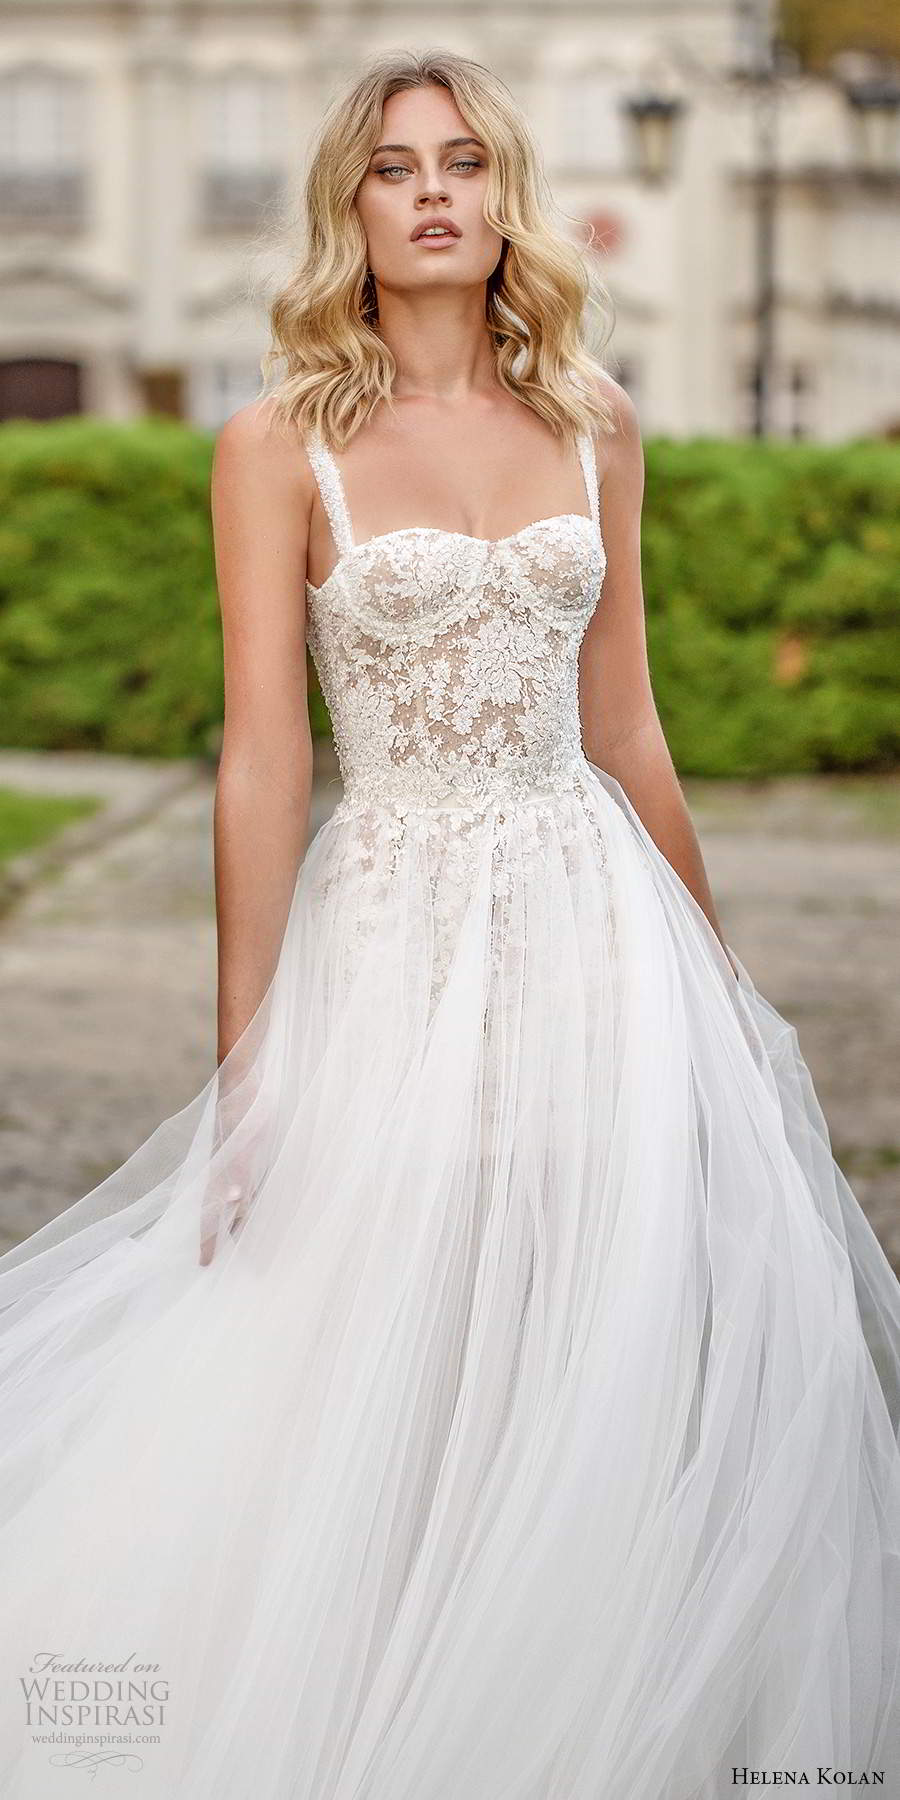 helena kolan 2020 bridal sleeveless straps semi sweetheart neckline fully embellished romantic lace a line ball gown wedding dress chapel train (14) zv